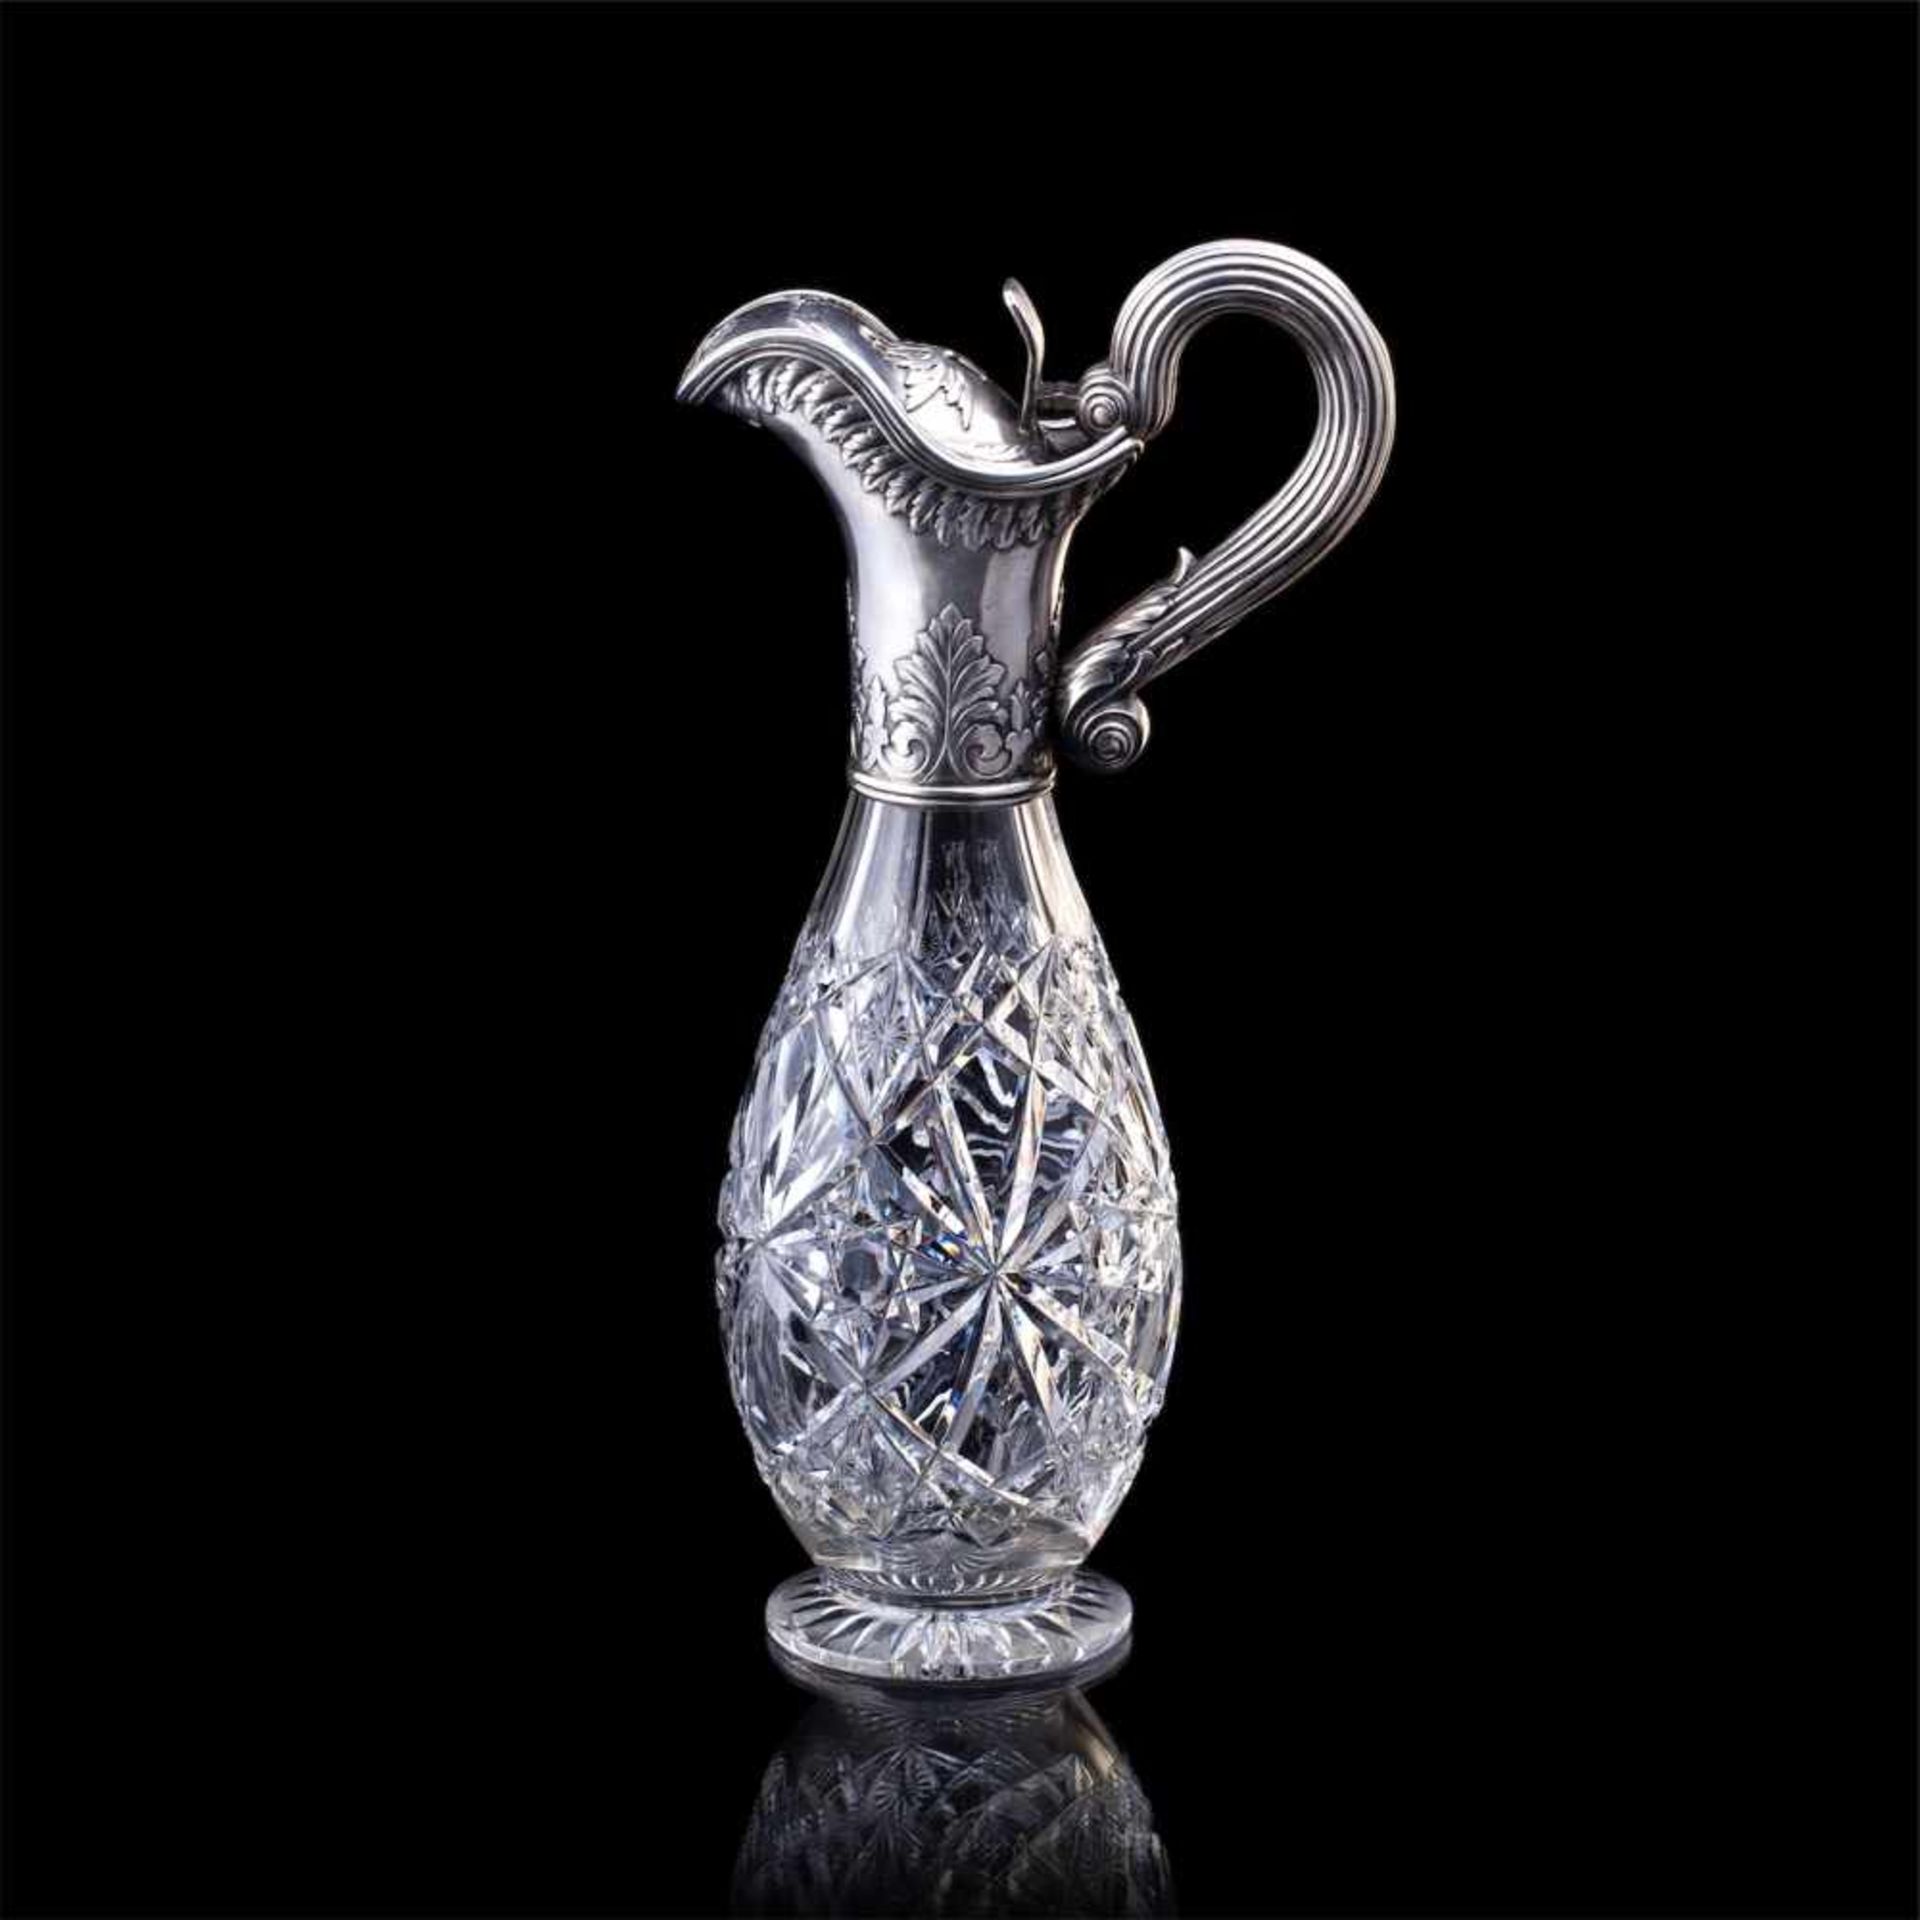 Russian impressive silver-gilt & crystal carafeA Russian impressive silver-gilt and cut-glass carafe